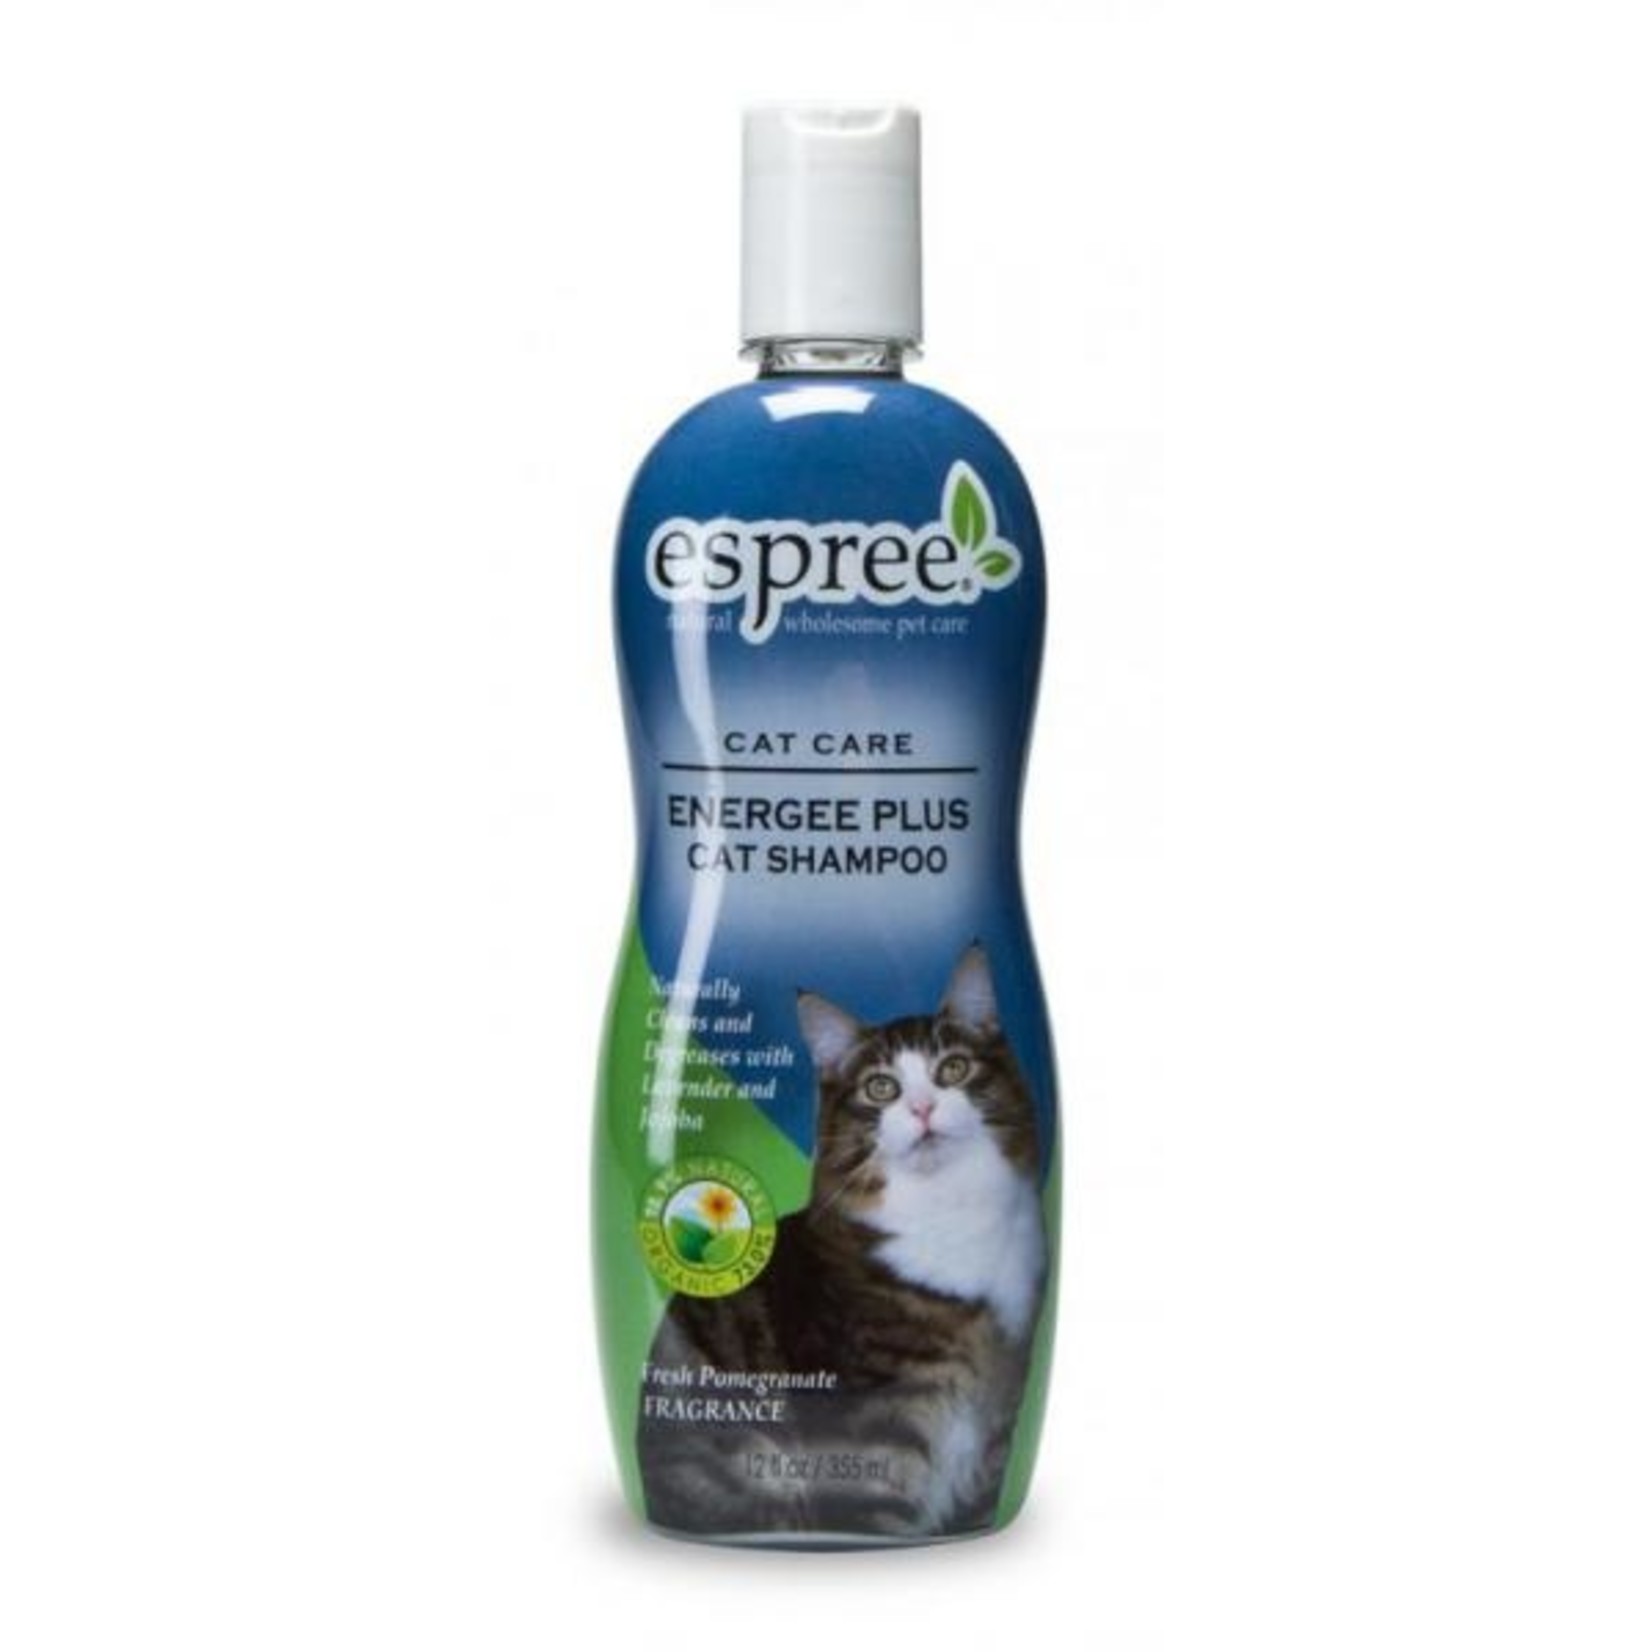 Espree Espree Energee plus CAT shampoo 355ml